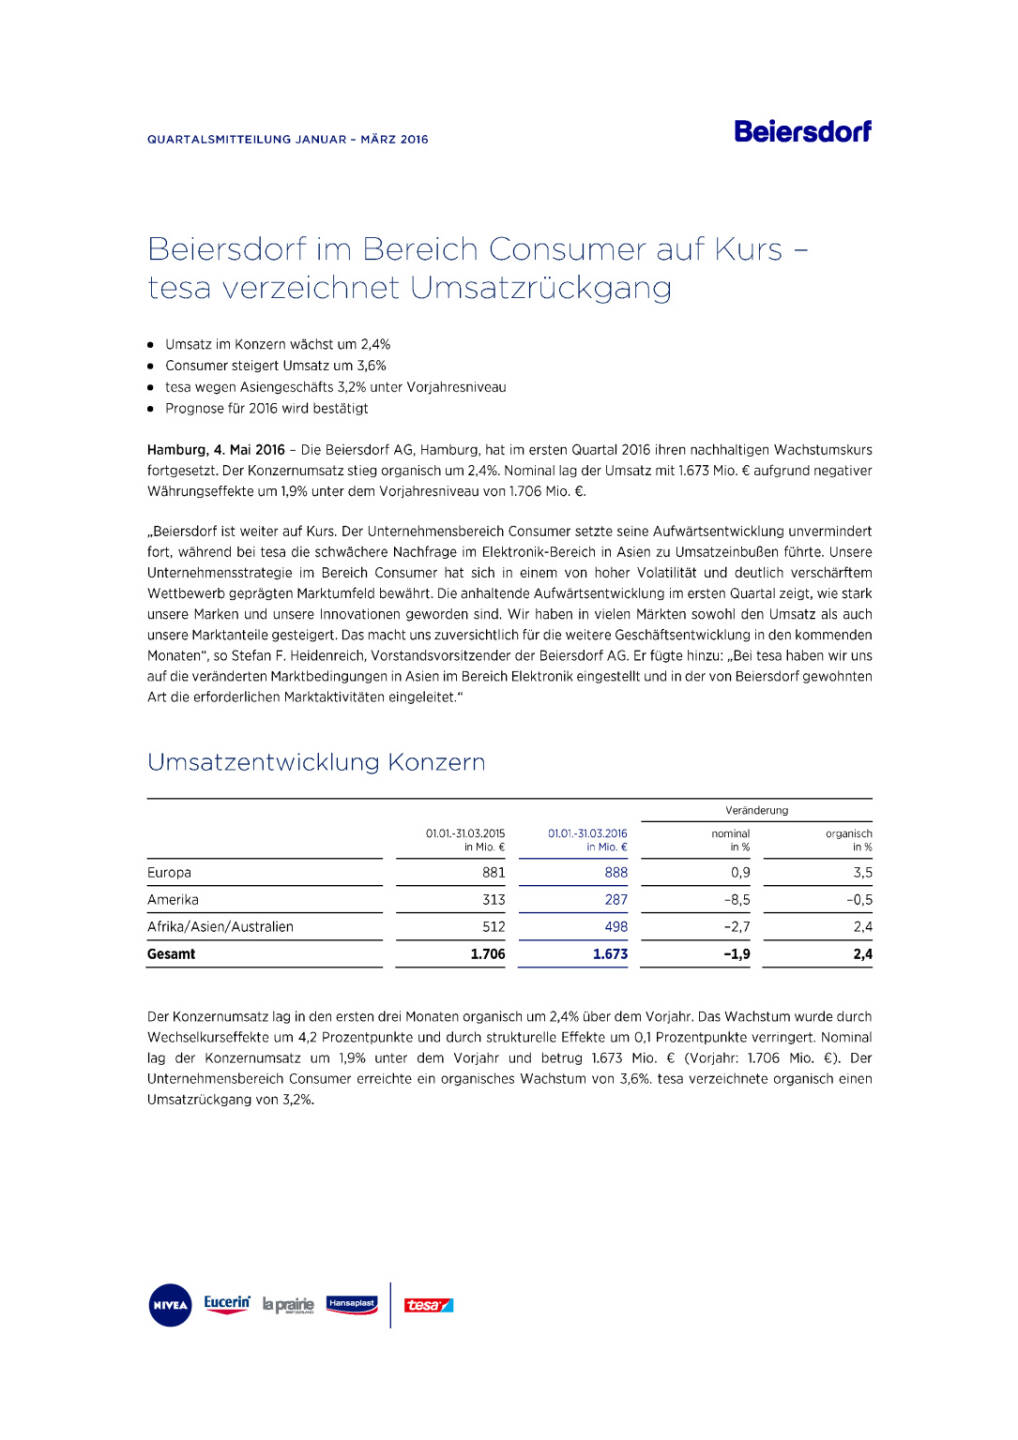 Beiersdorf Ergebnisse Q 1 2016, Seite 1/4, komplettes Dokument unter http://boerse-social.com/static/uploads/file_1002_beiersdorf_ergebnisse_q_1_2016.pdf